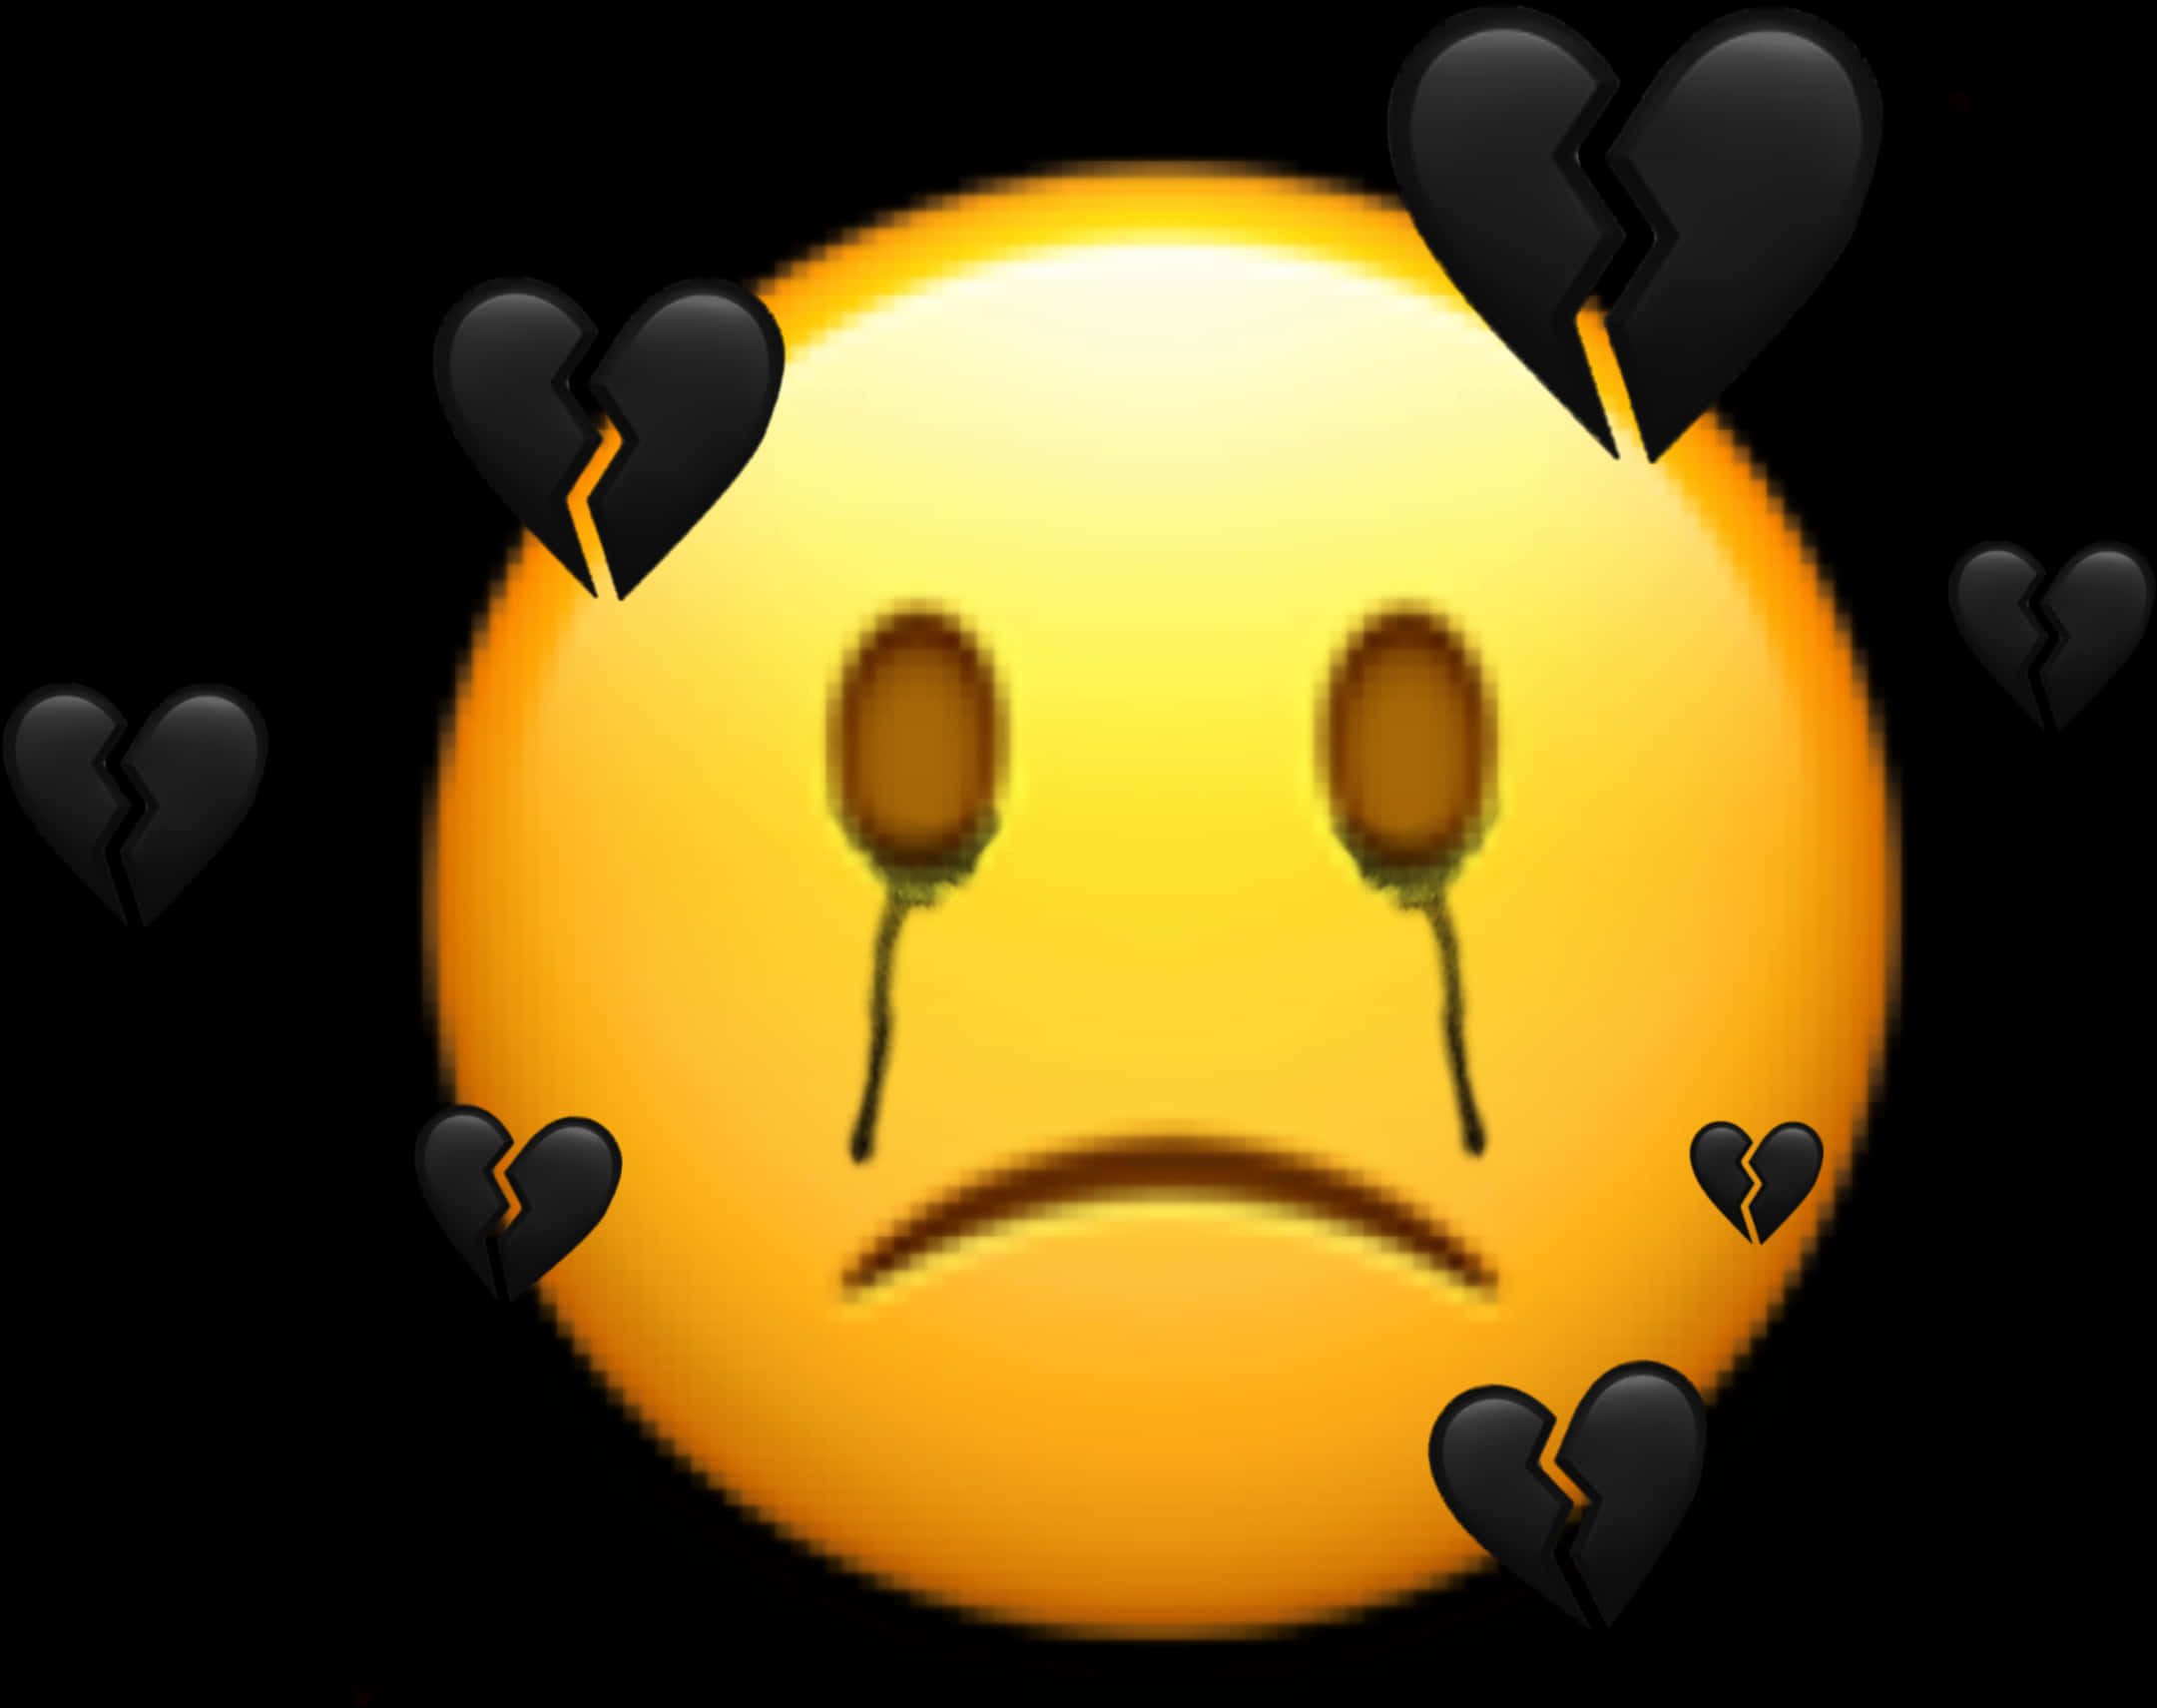 Broken Heart Emoji Surroundedby Black Hearts PNG